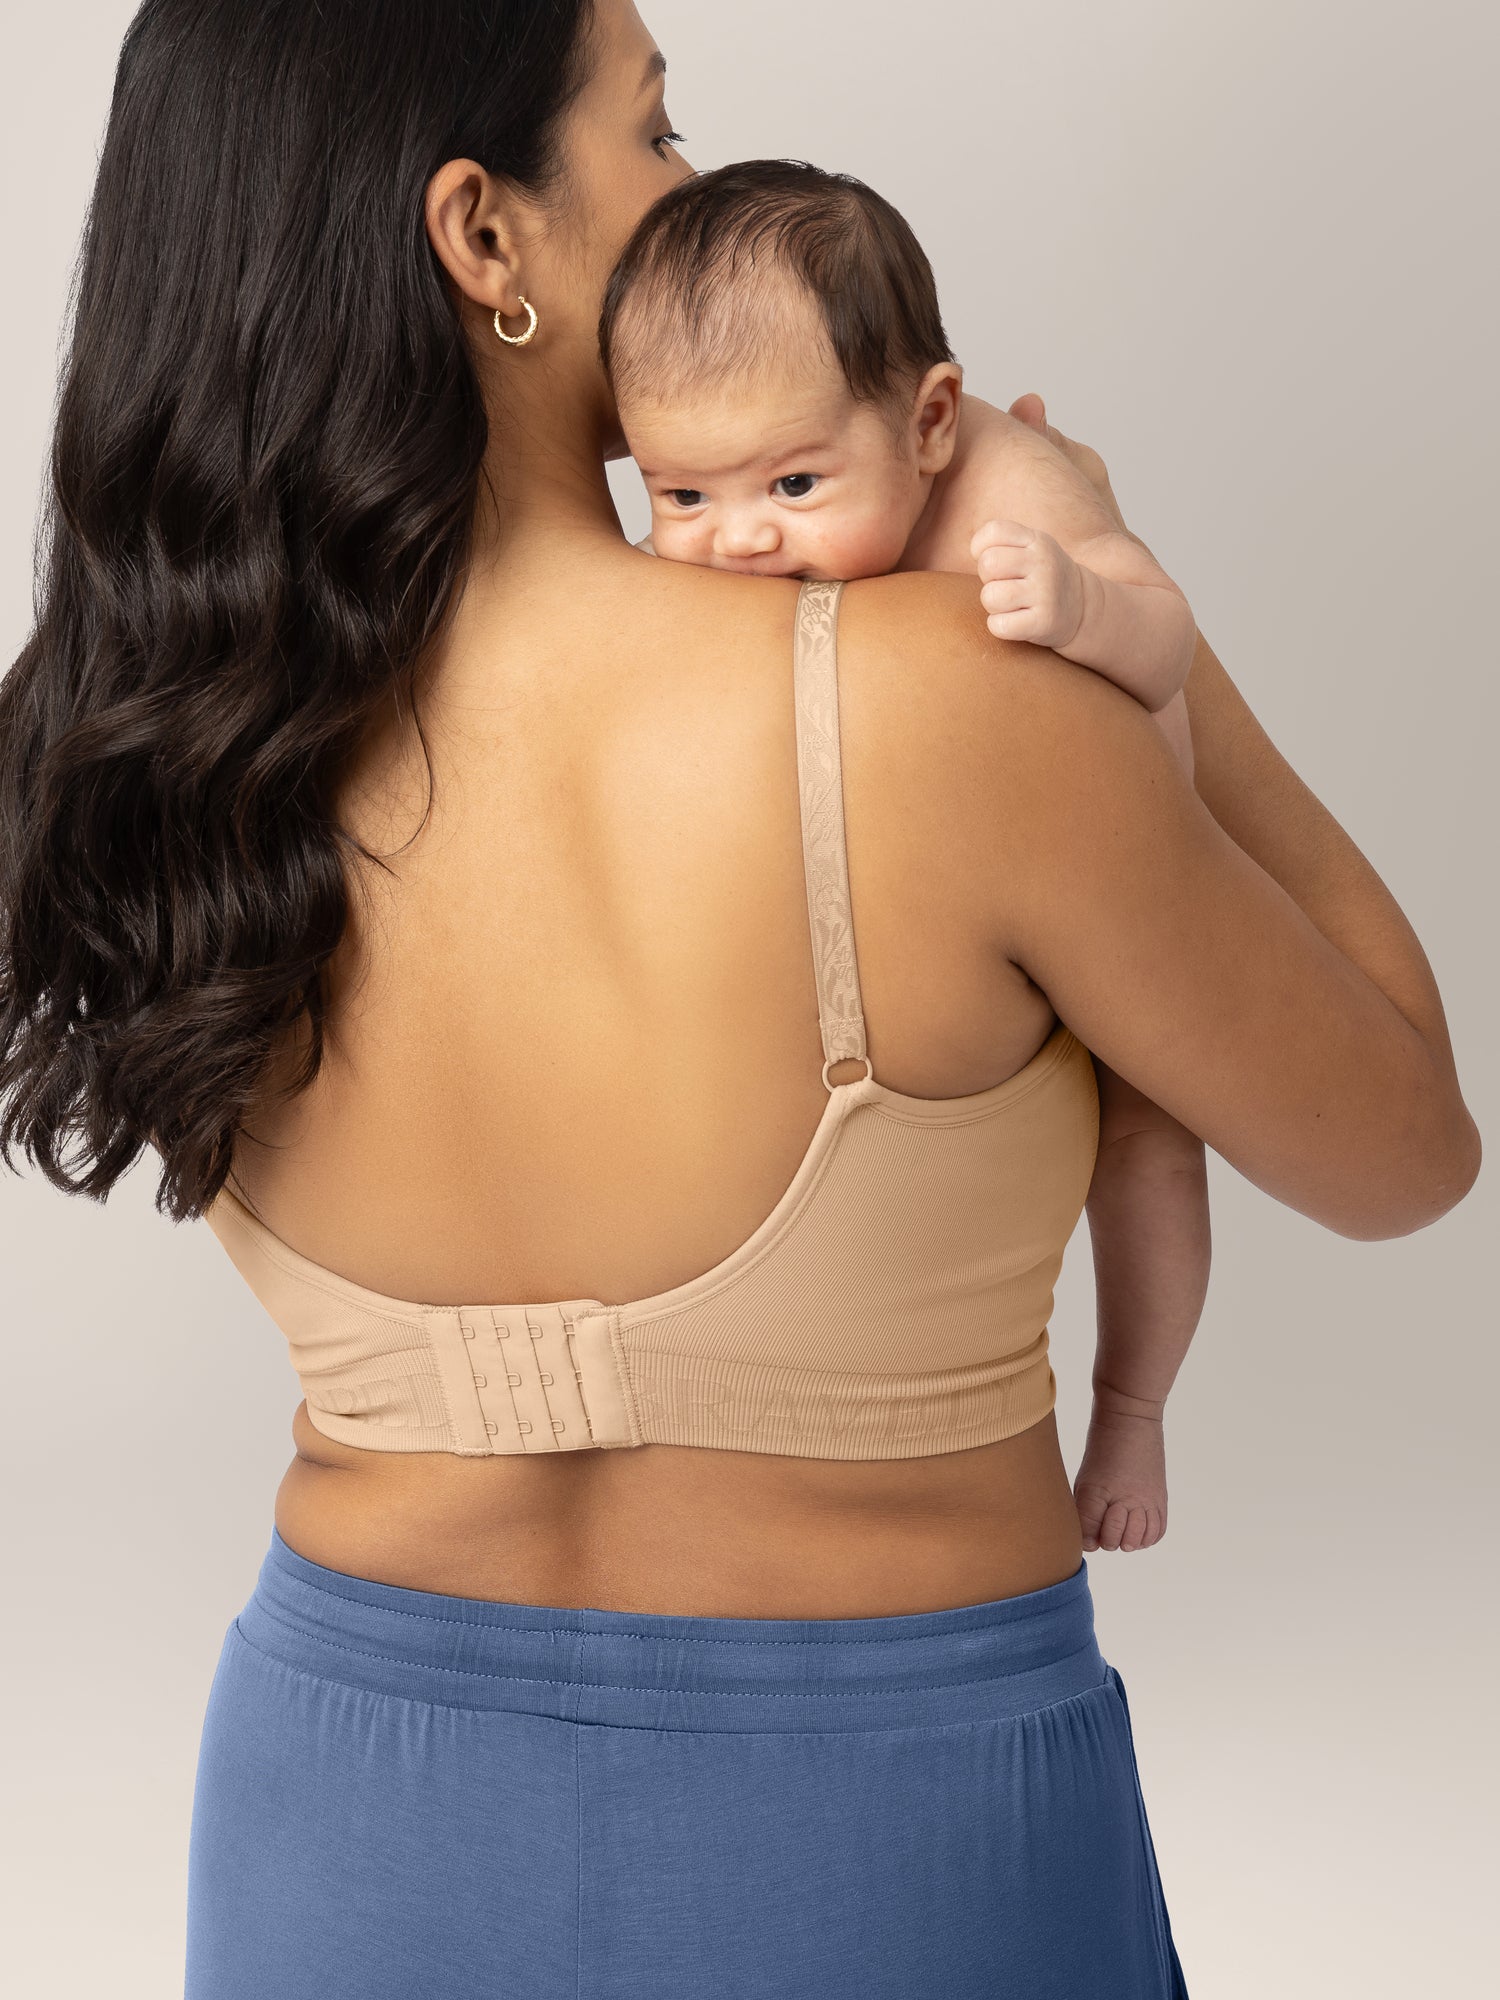 Hands Free Pumping Bra, Adjustable Wireless Nursing Bra for Breastfeeding, S-XXL  Grey White : : Clothing, Shoes & Accessories